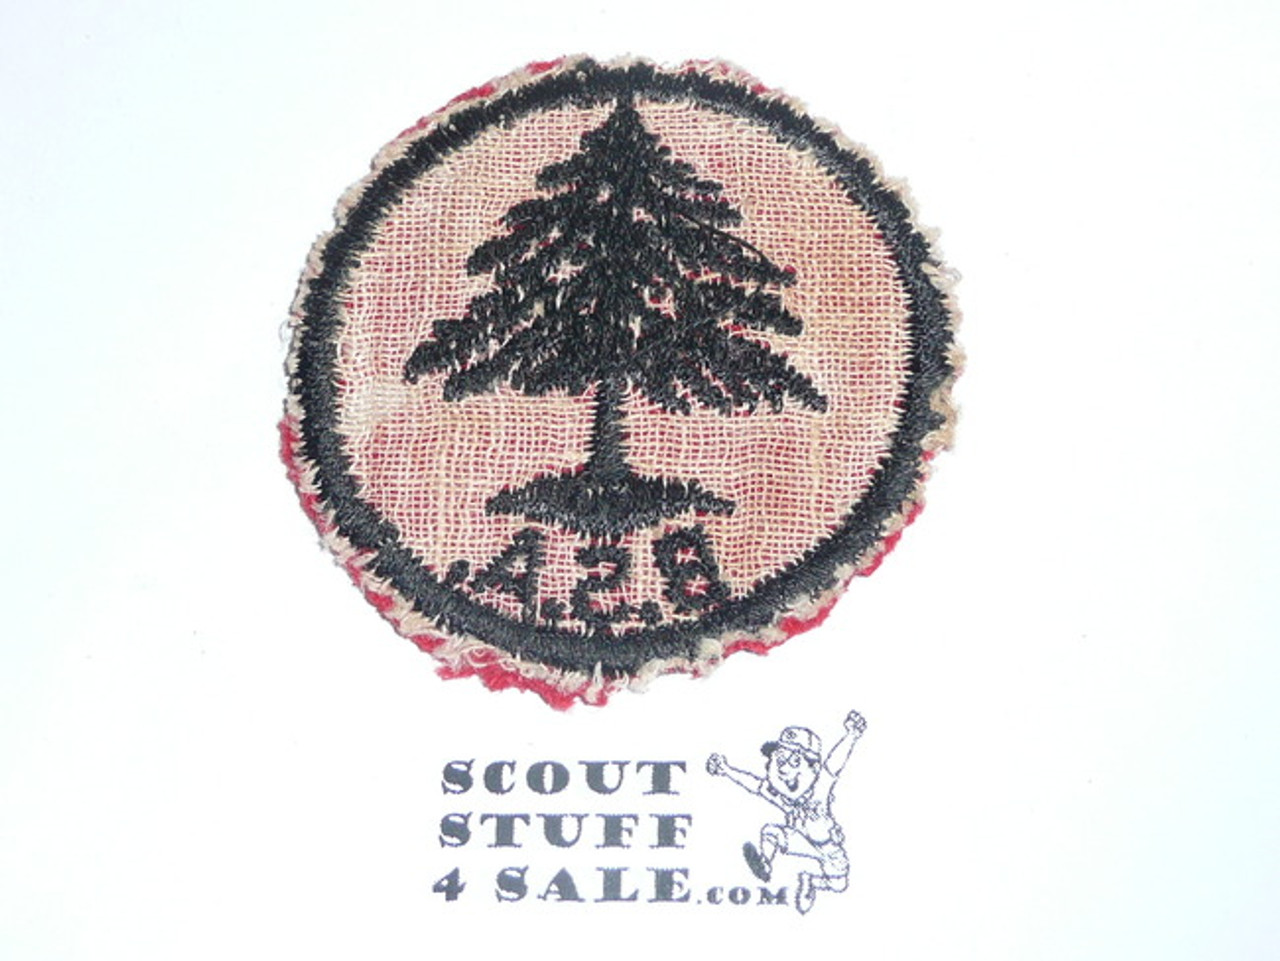 Pine Tree Patrol Medallion, Felt w/BSA & Solid Black Ring back, 1933-1939, Used withh a small moth hole